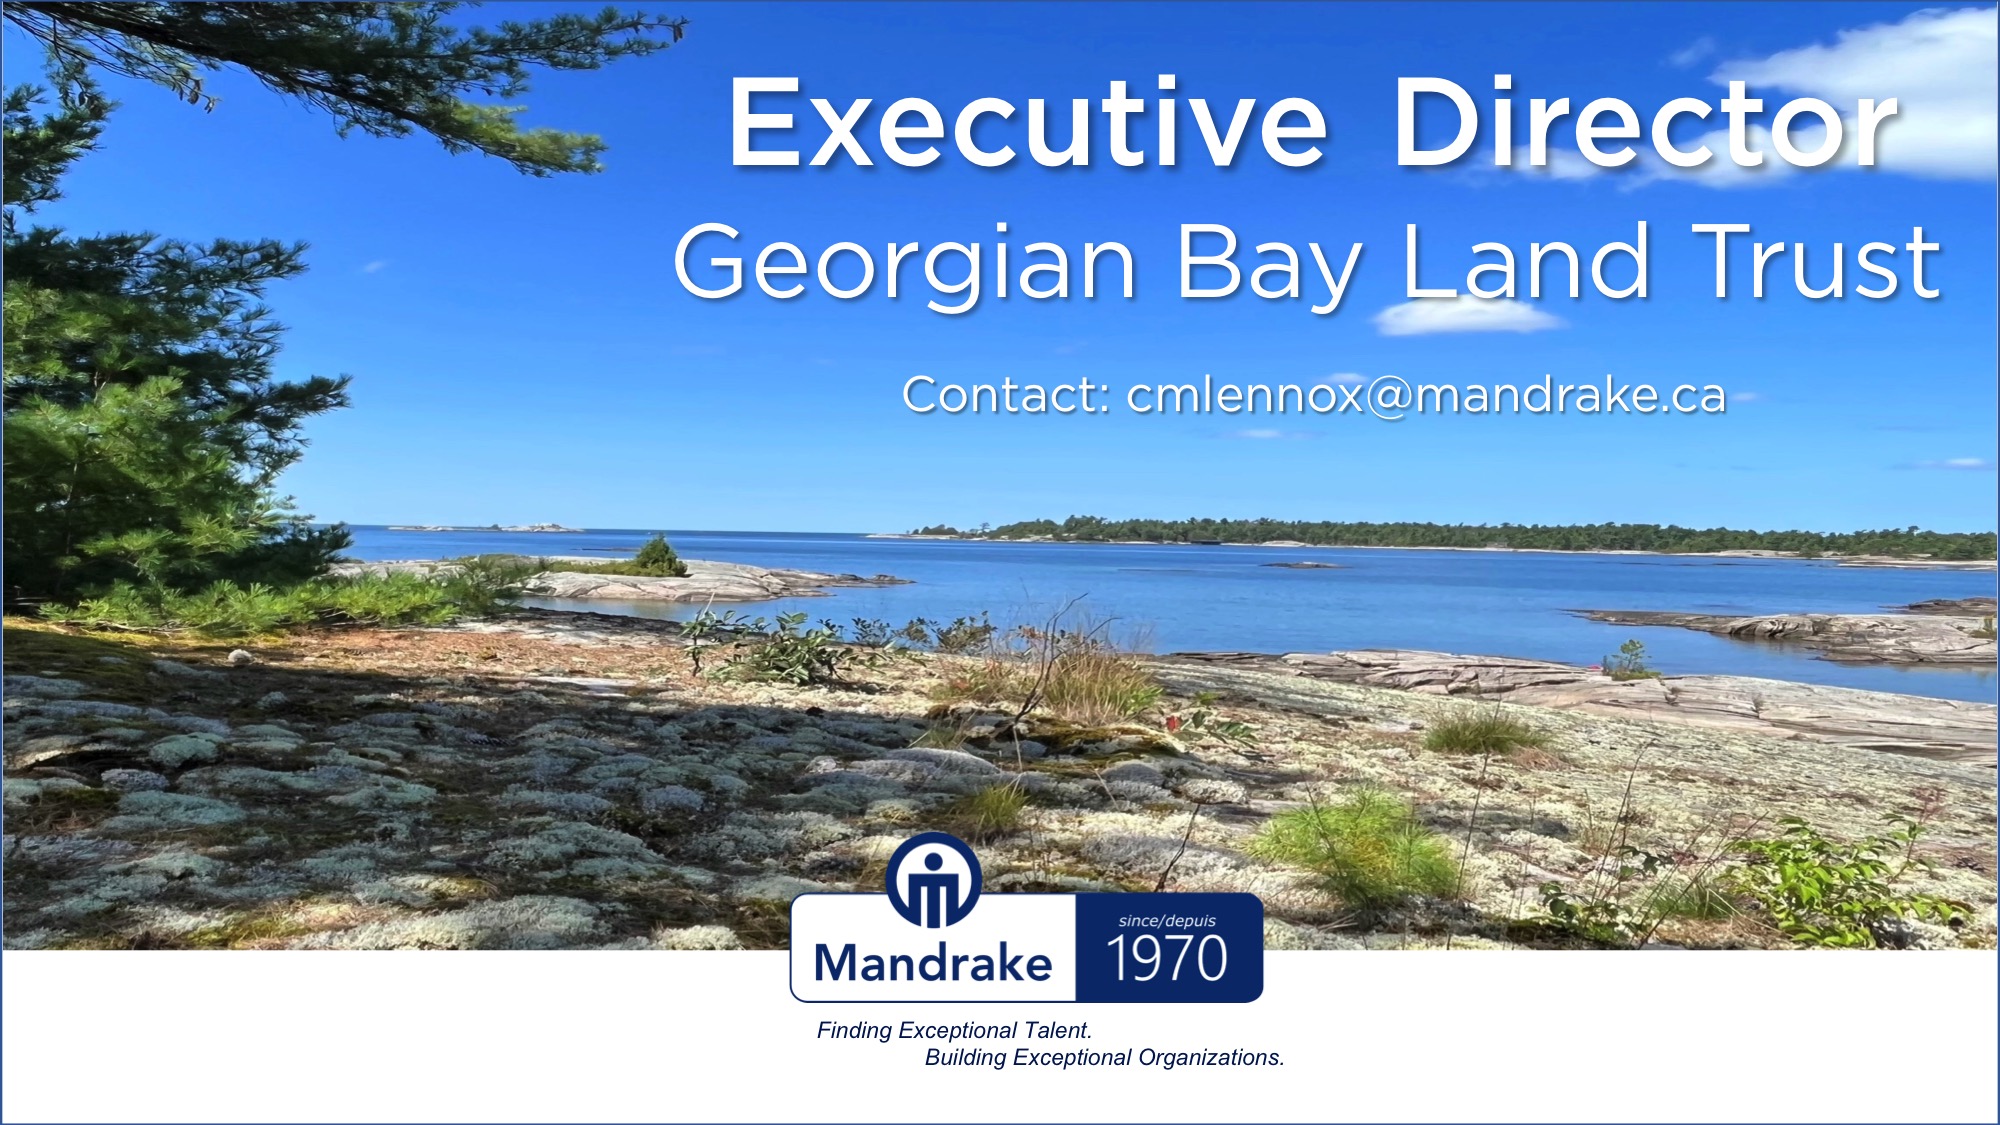 Are you the Georgian Bay Land Trust's next Executive Director?